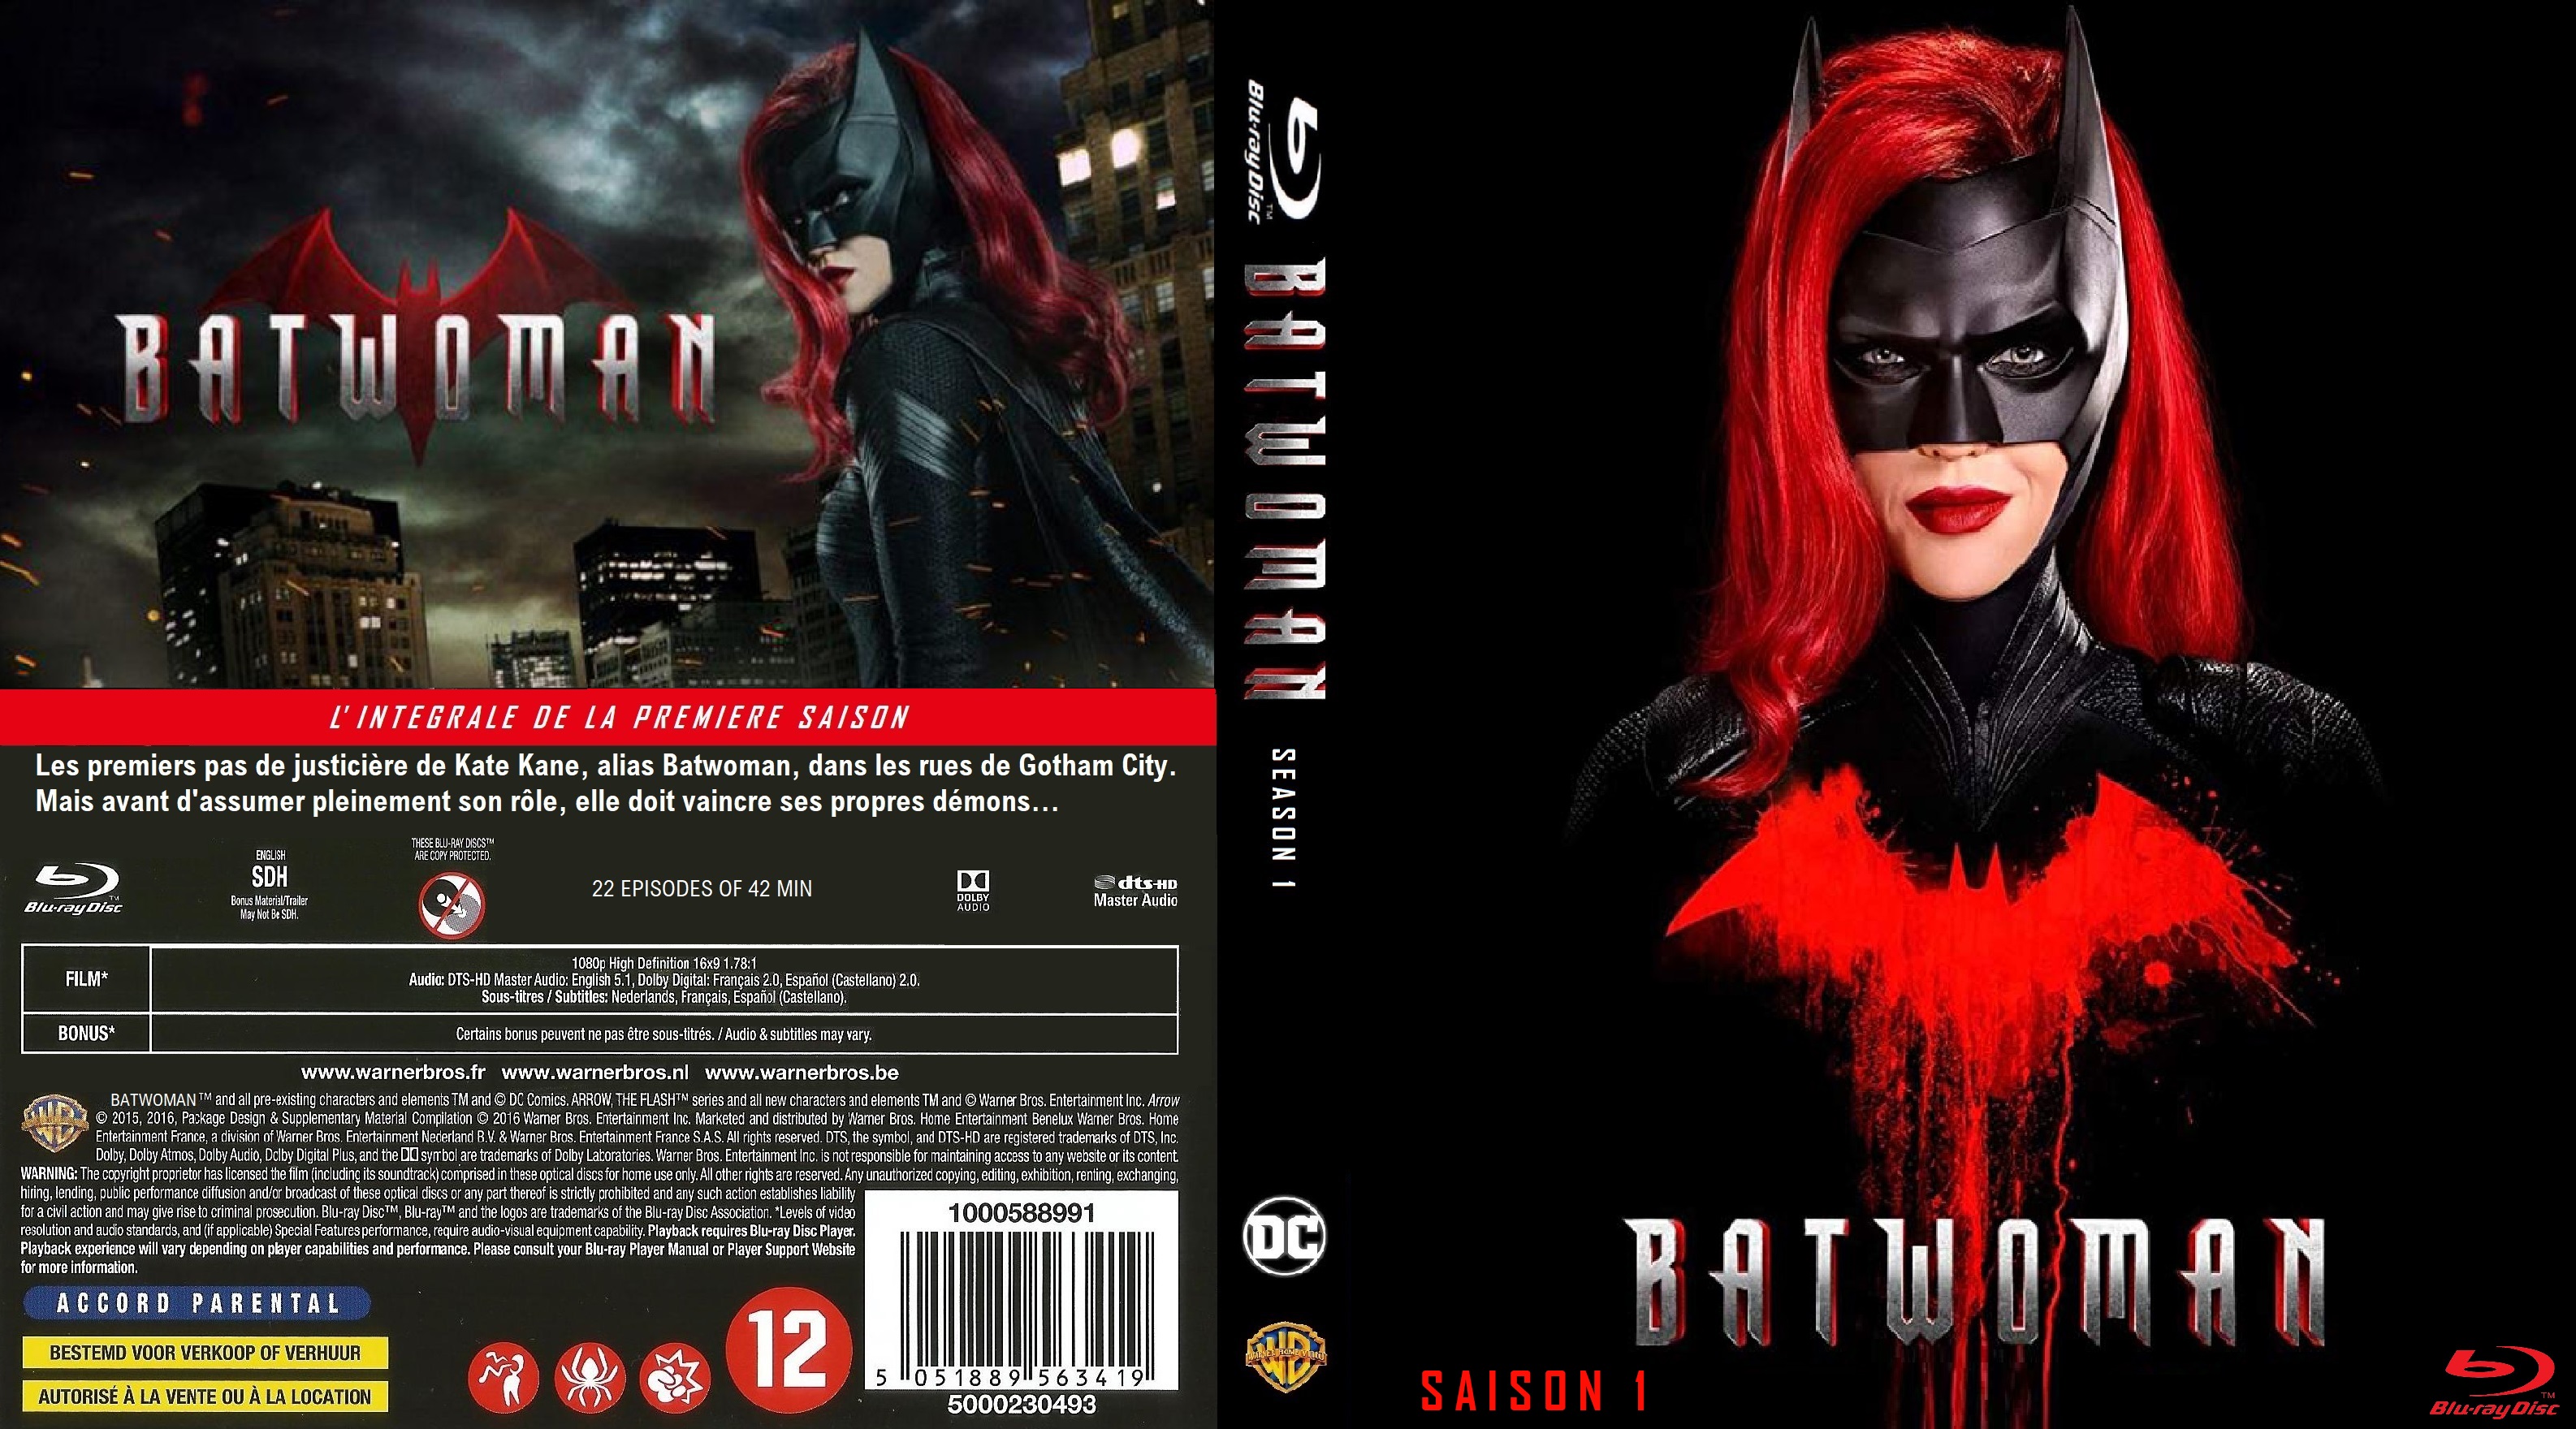 Jaquette DVD Batwoman Saison 1 Blu-ray custom v2